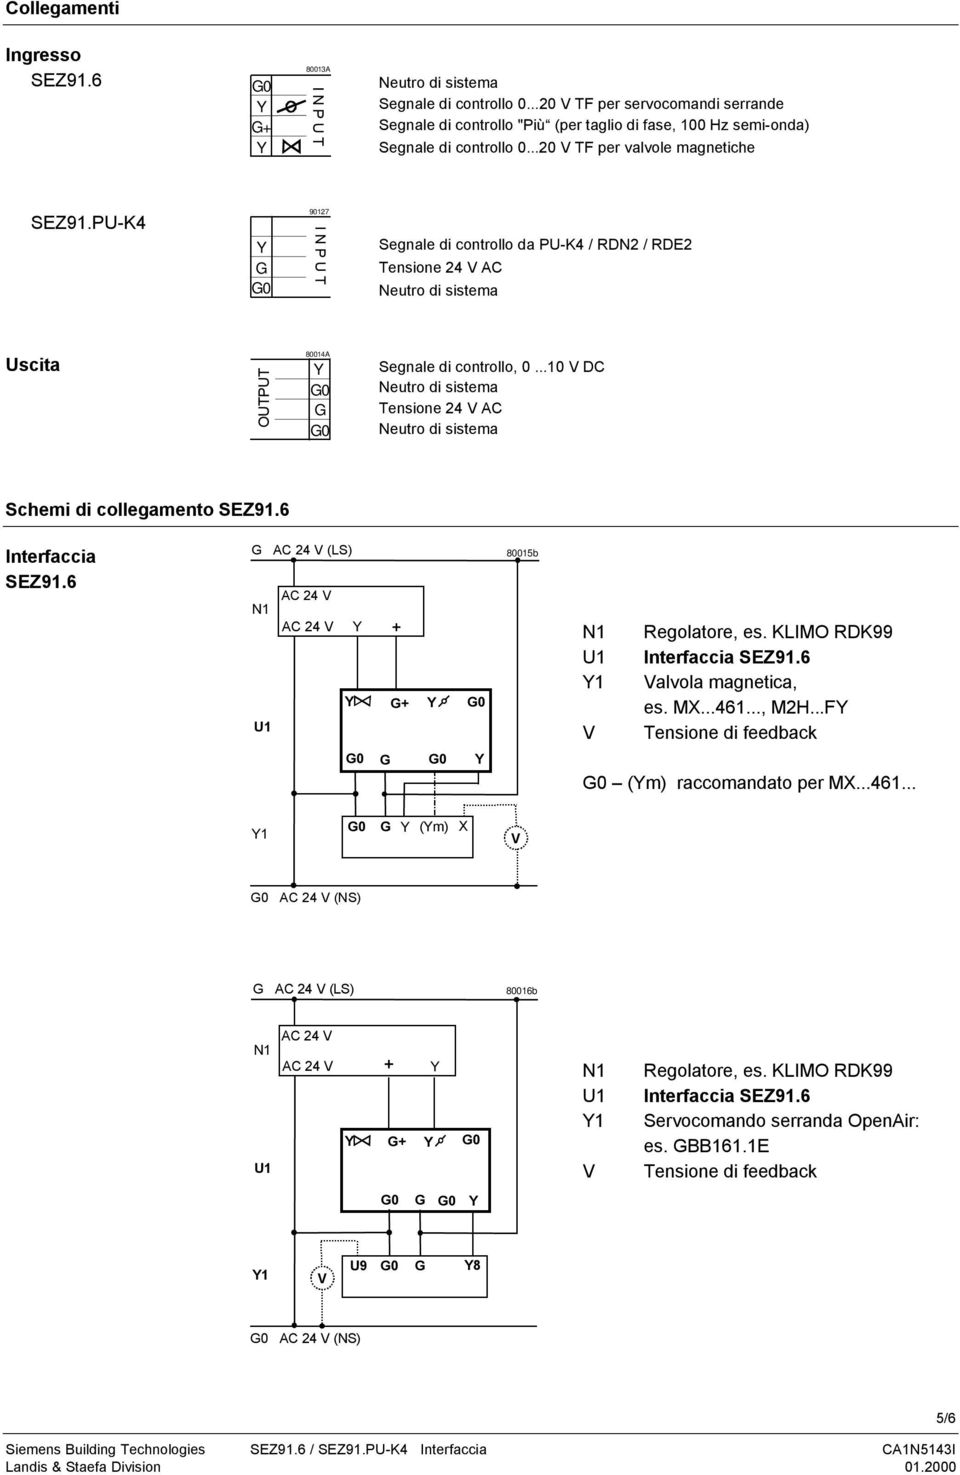 .. DC Tensione 24 AC Schemi di collegamento Interfaccia AC 24 (LS) AC 24 AC 24 + + 815b 1 Regolatore, es. KLIMO RDK99 Interfaccia alvola magnetica, es. MX...461..., M2H.